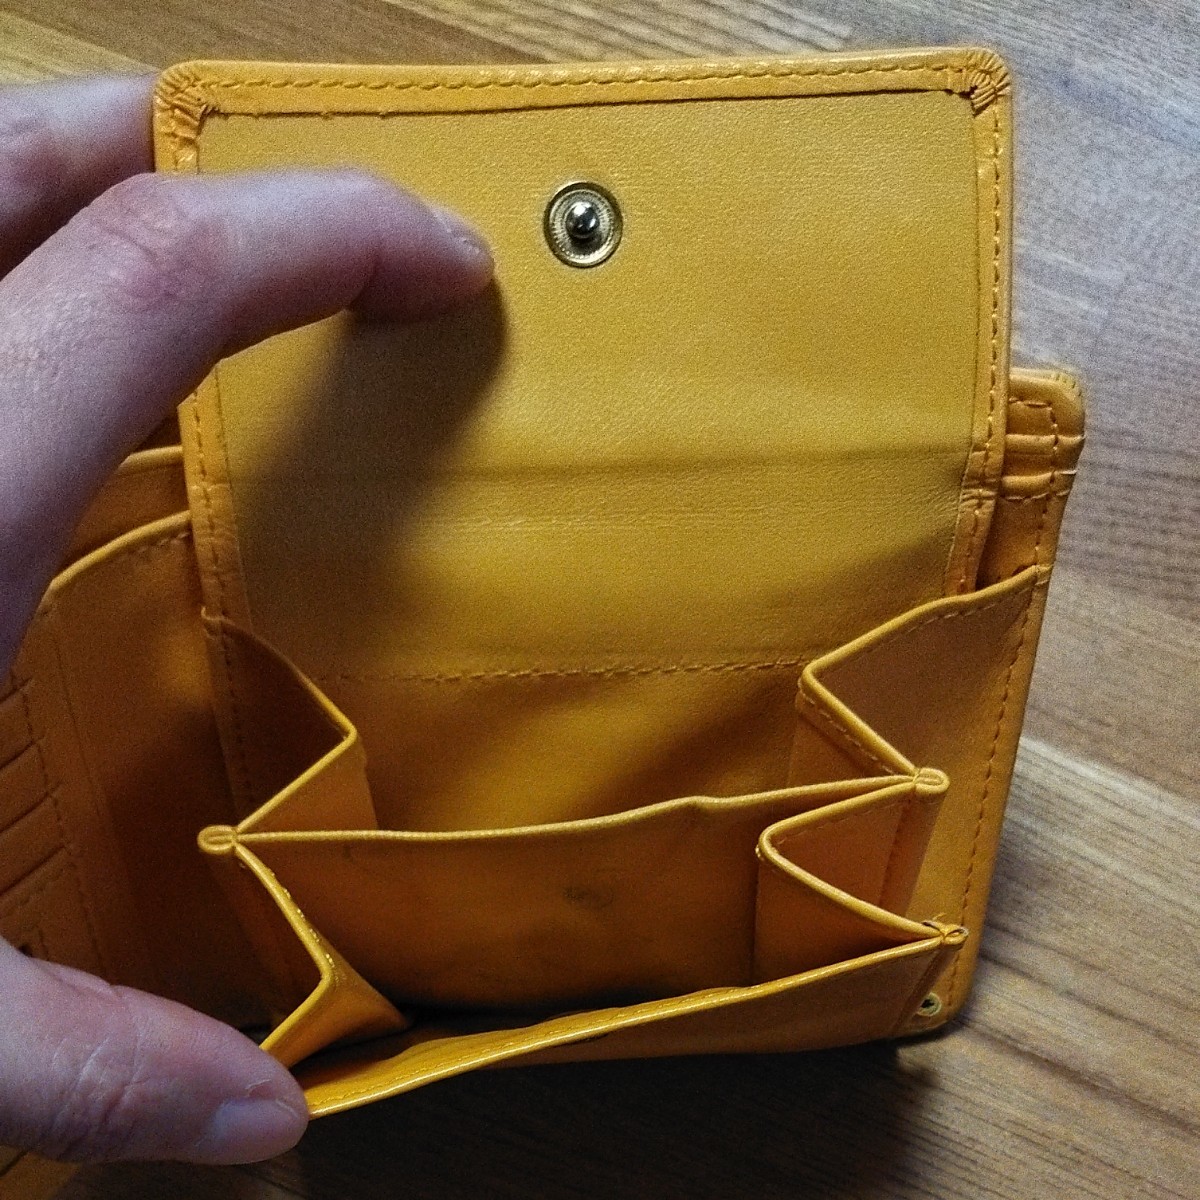 縁起物の黄色財布 - 長財布